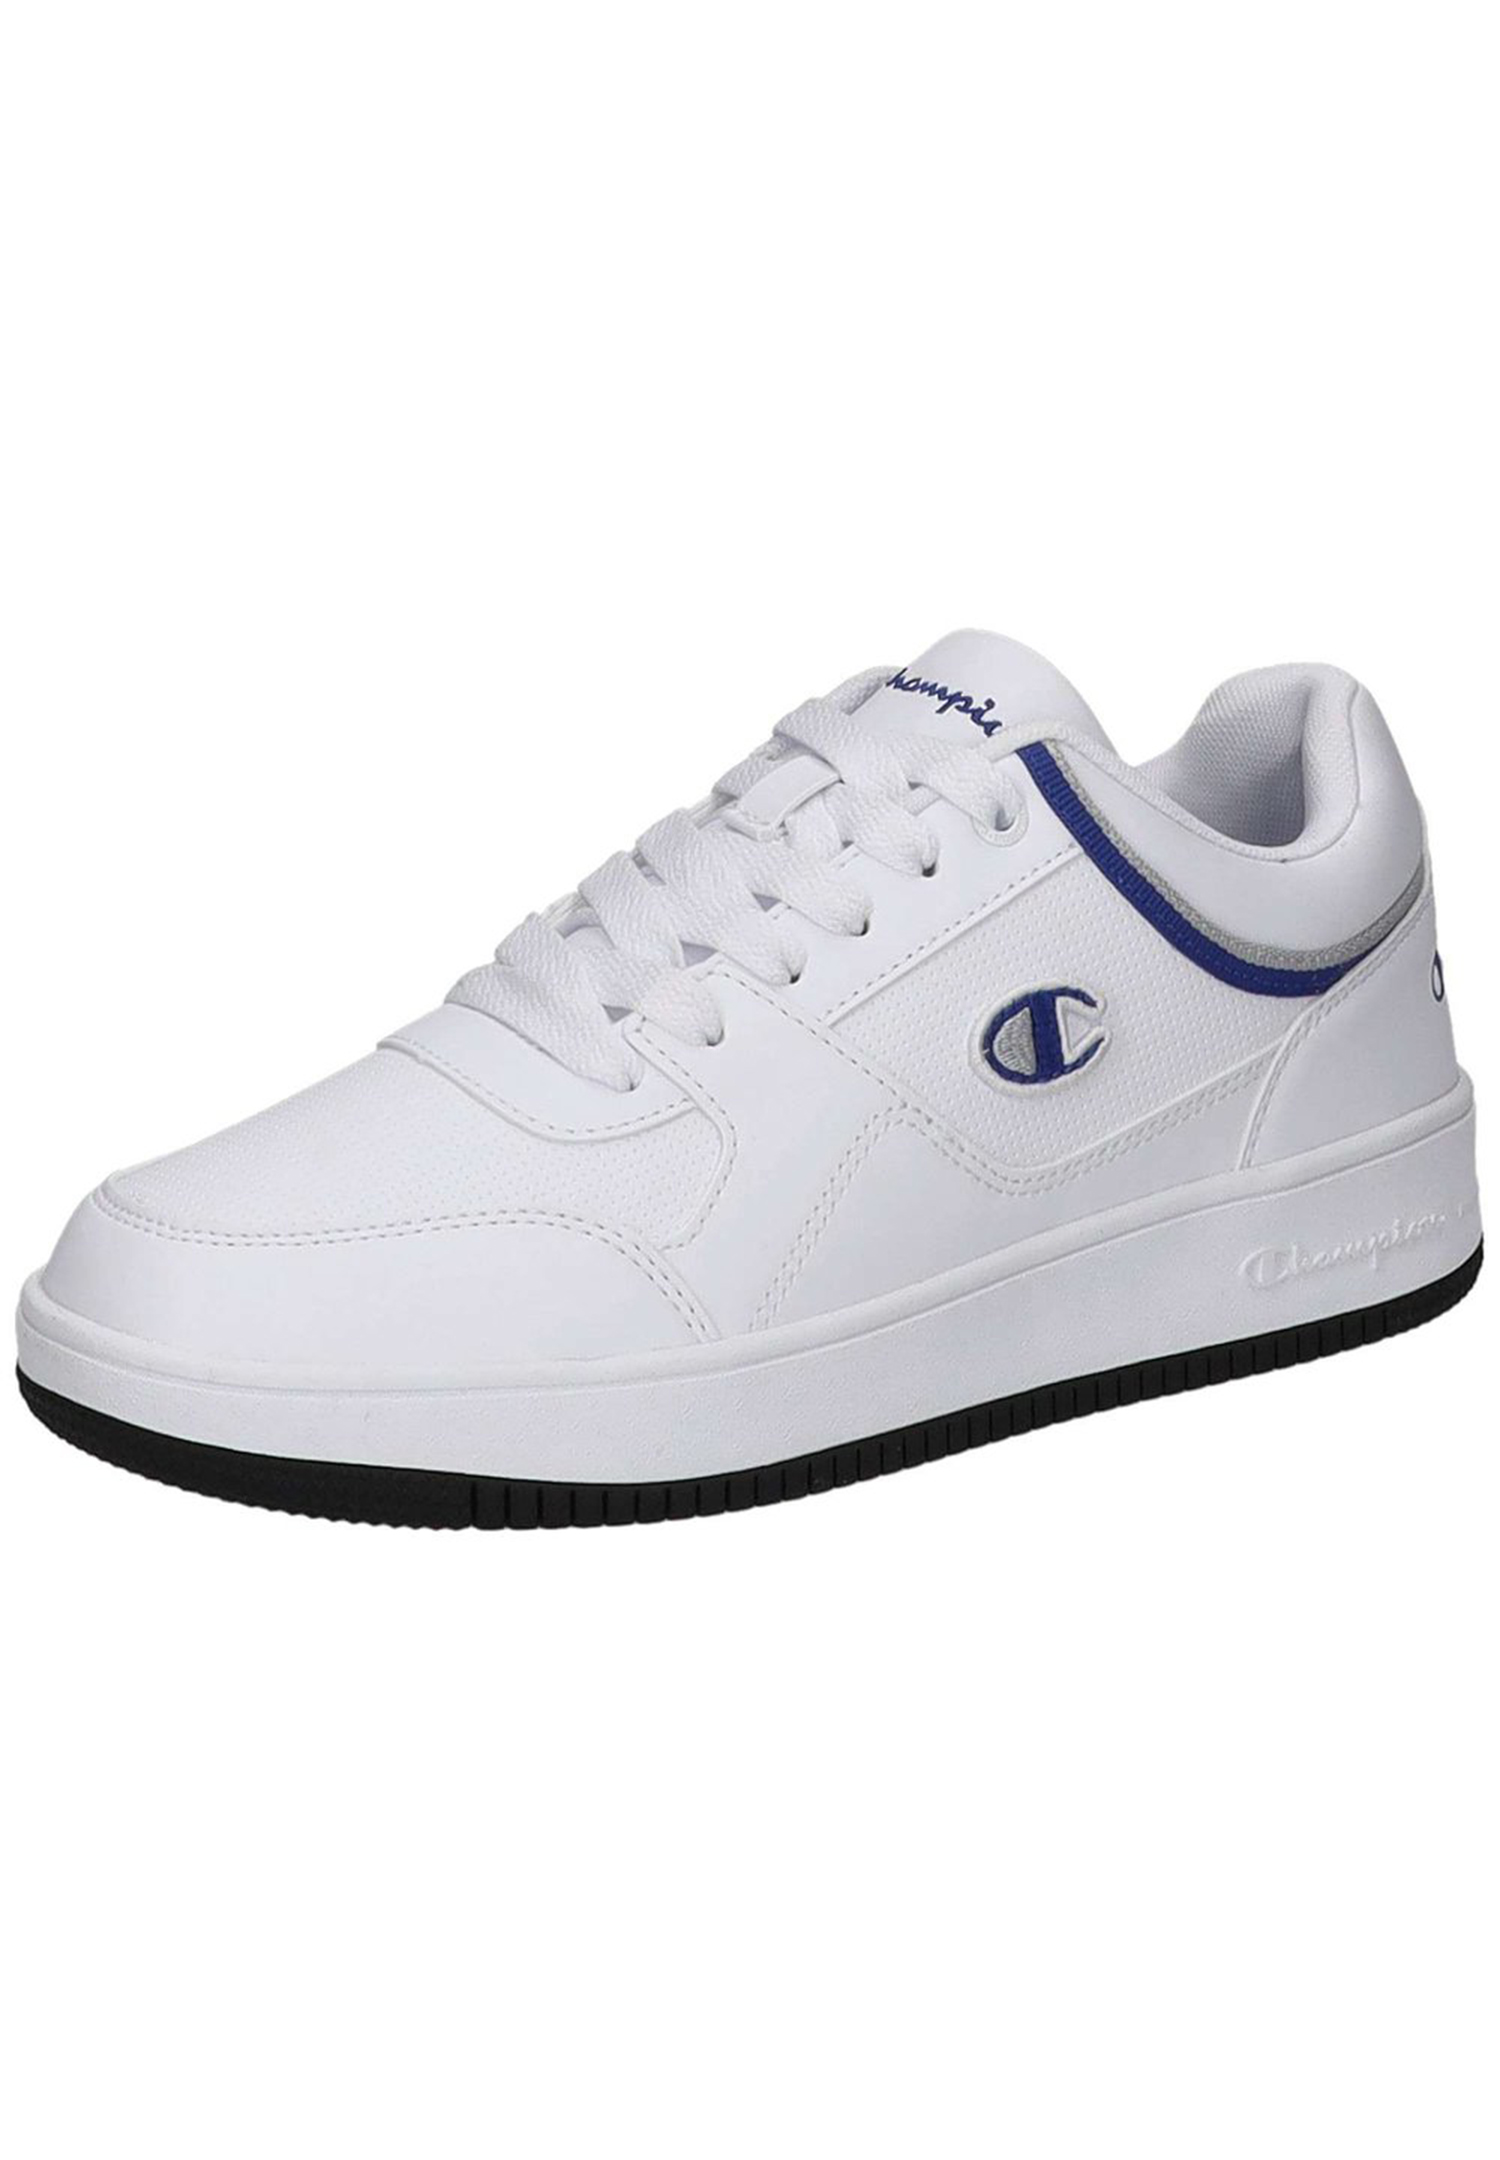 Champion REBOUND LOW Herren Sneaker S21905-CHA-WW004 weiß/grau/blau